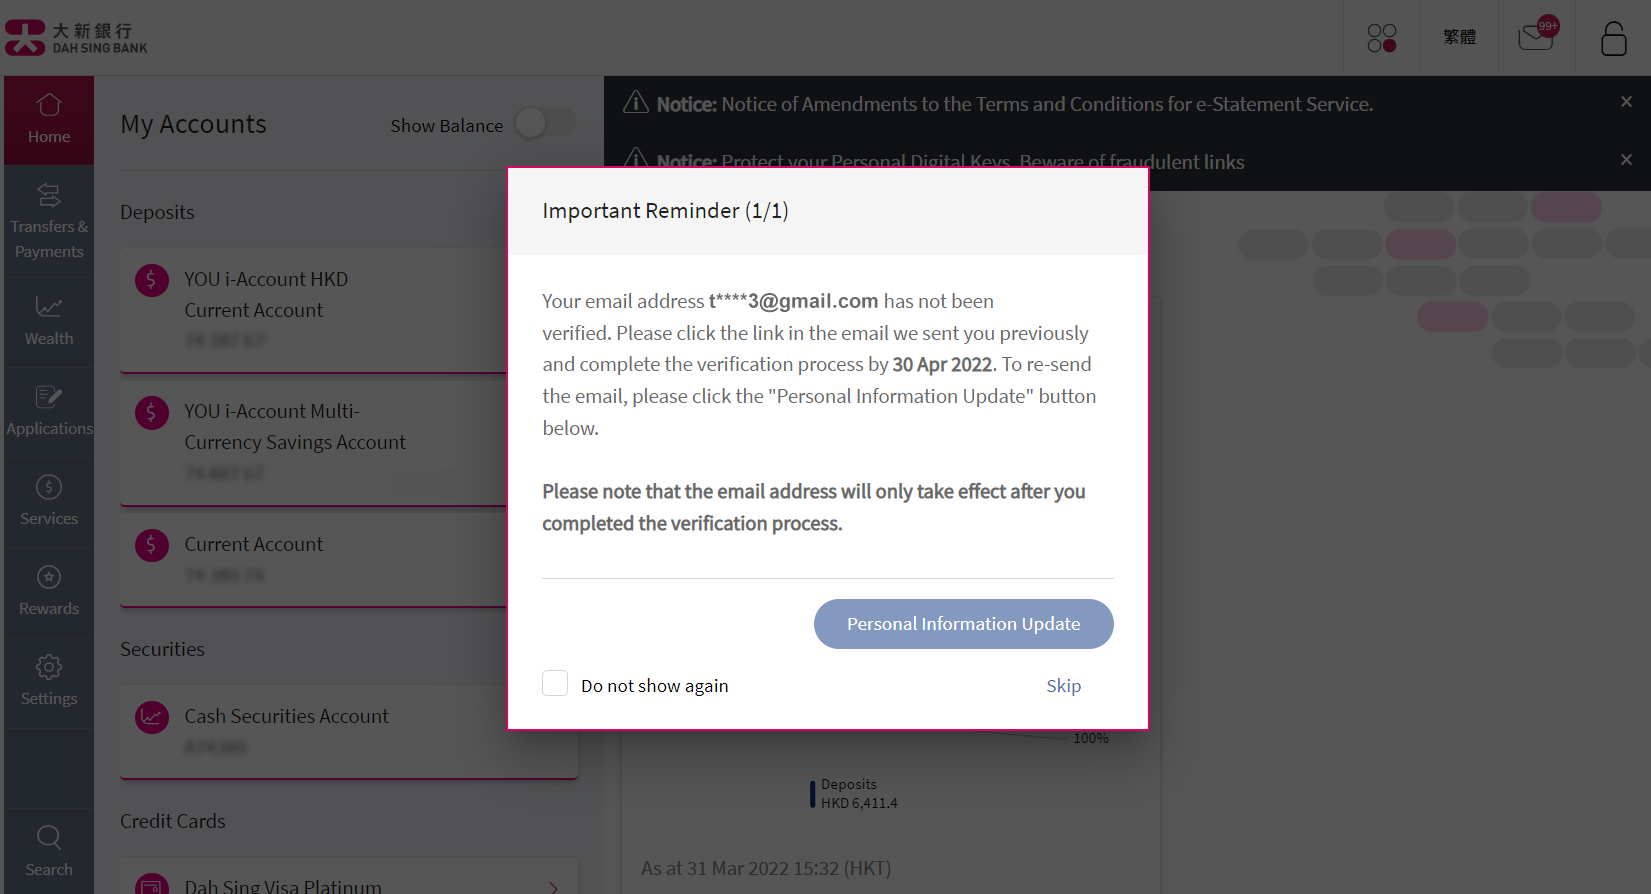 Screencap of Dah Sing e-Banking showing Personal Information Update